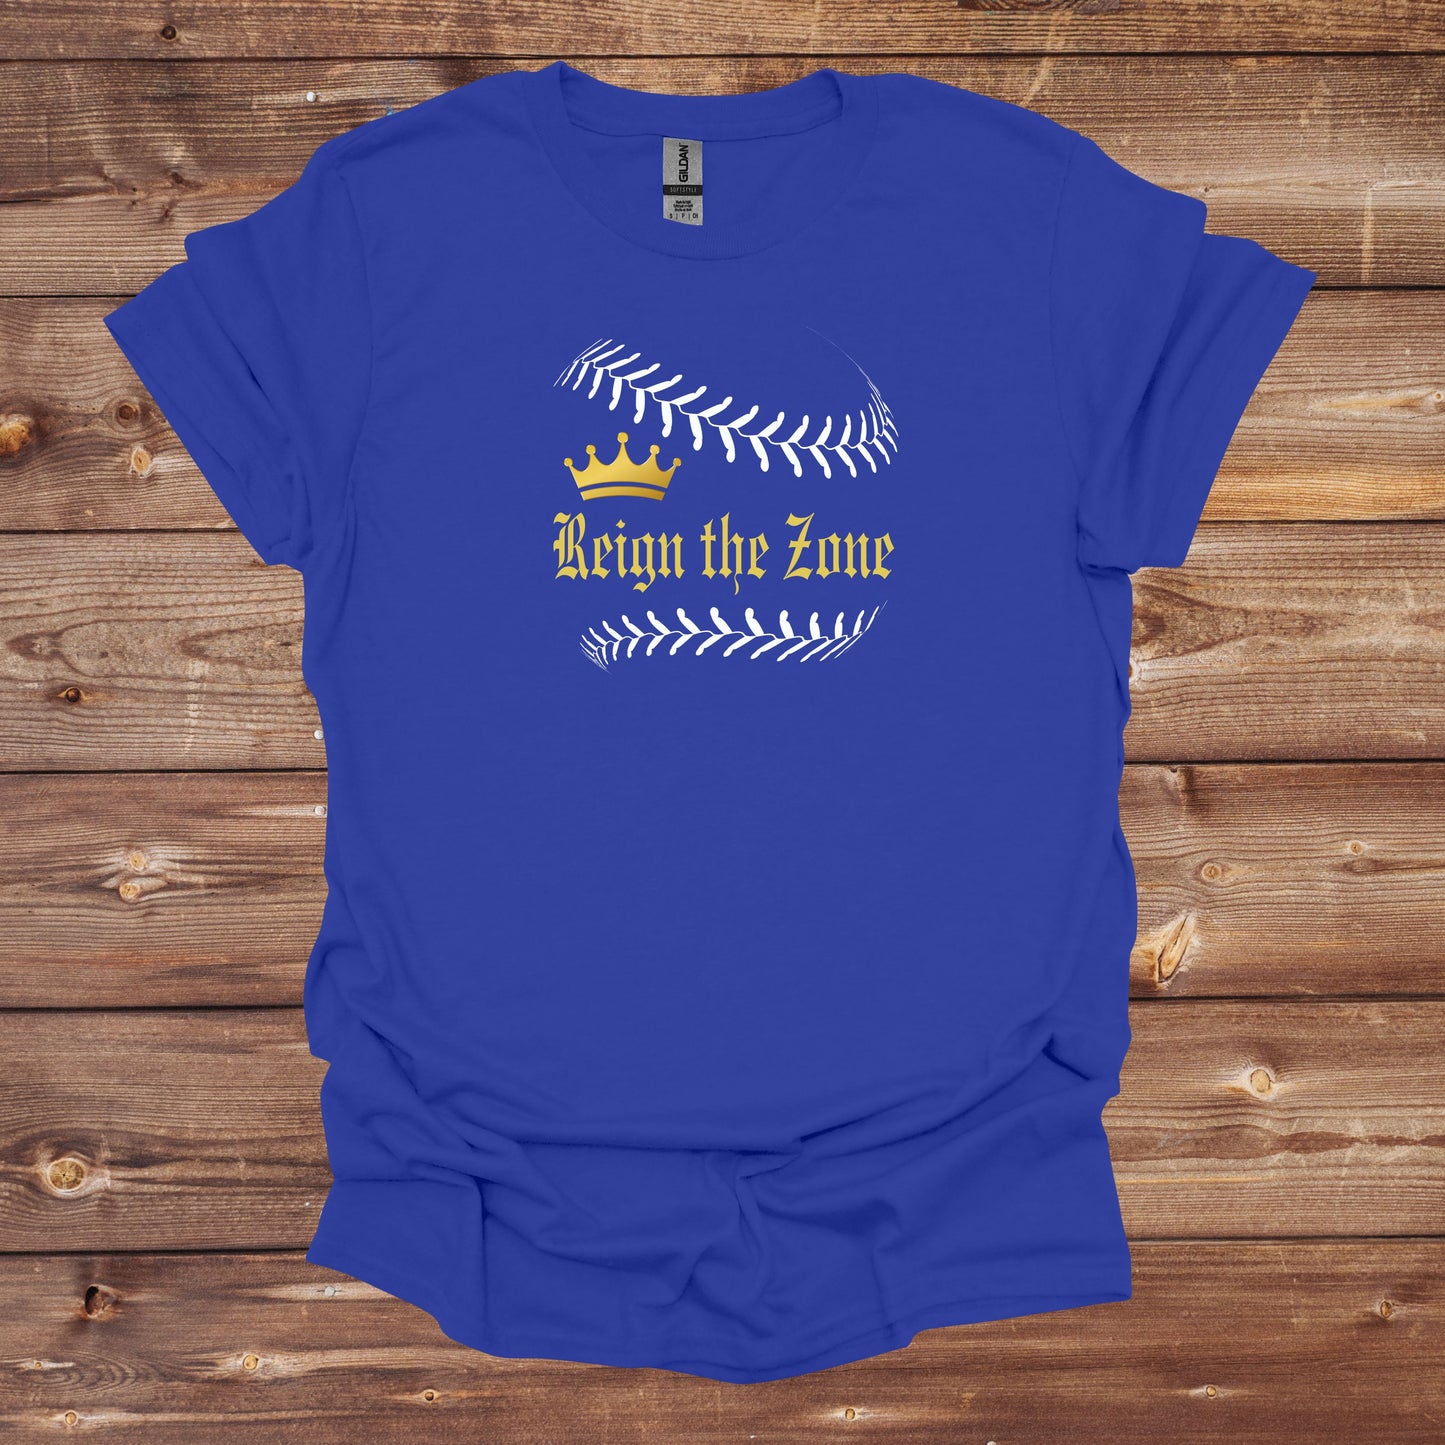 Kansas City Royals T-Shirt - Reign the Zone - Sports